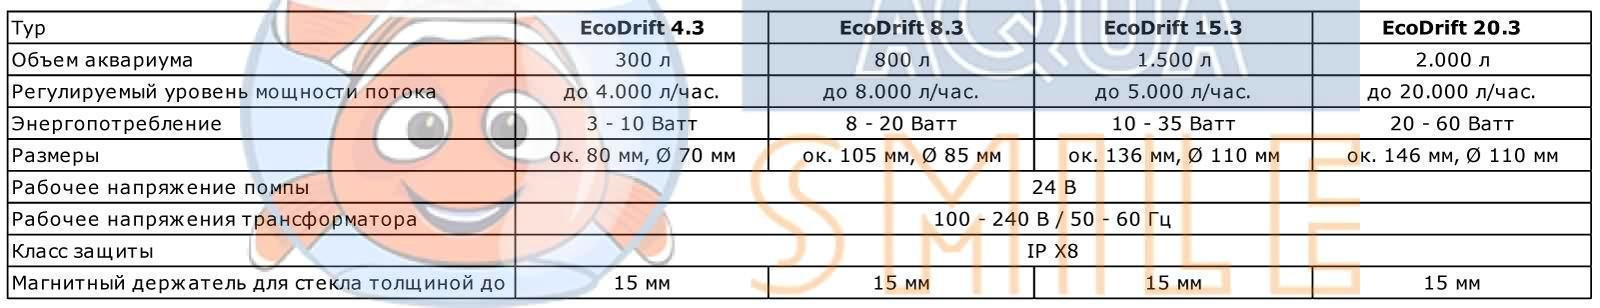 Циркуляционный насос для аквариума Aqua Medic EcoDrift 8.3 табл